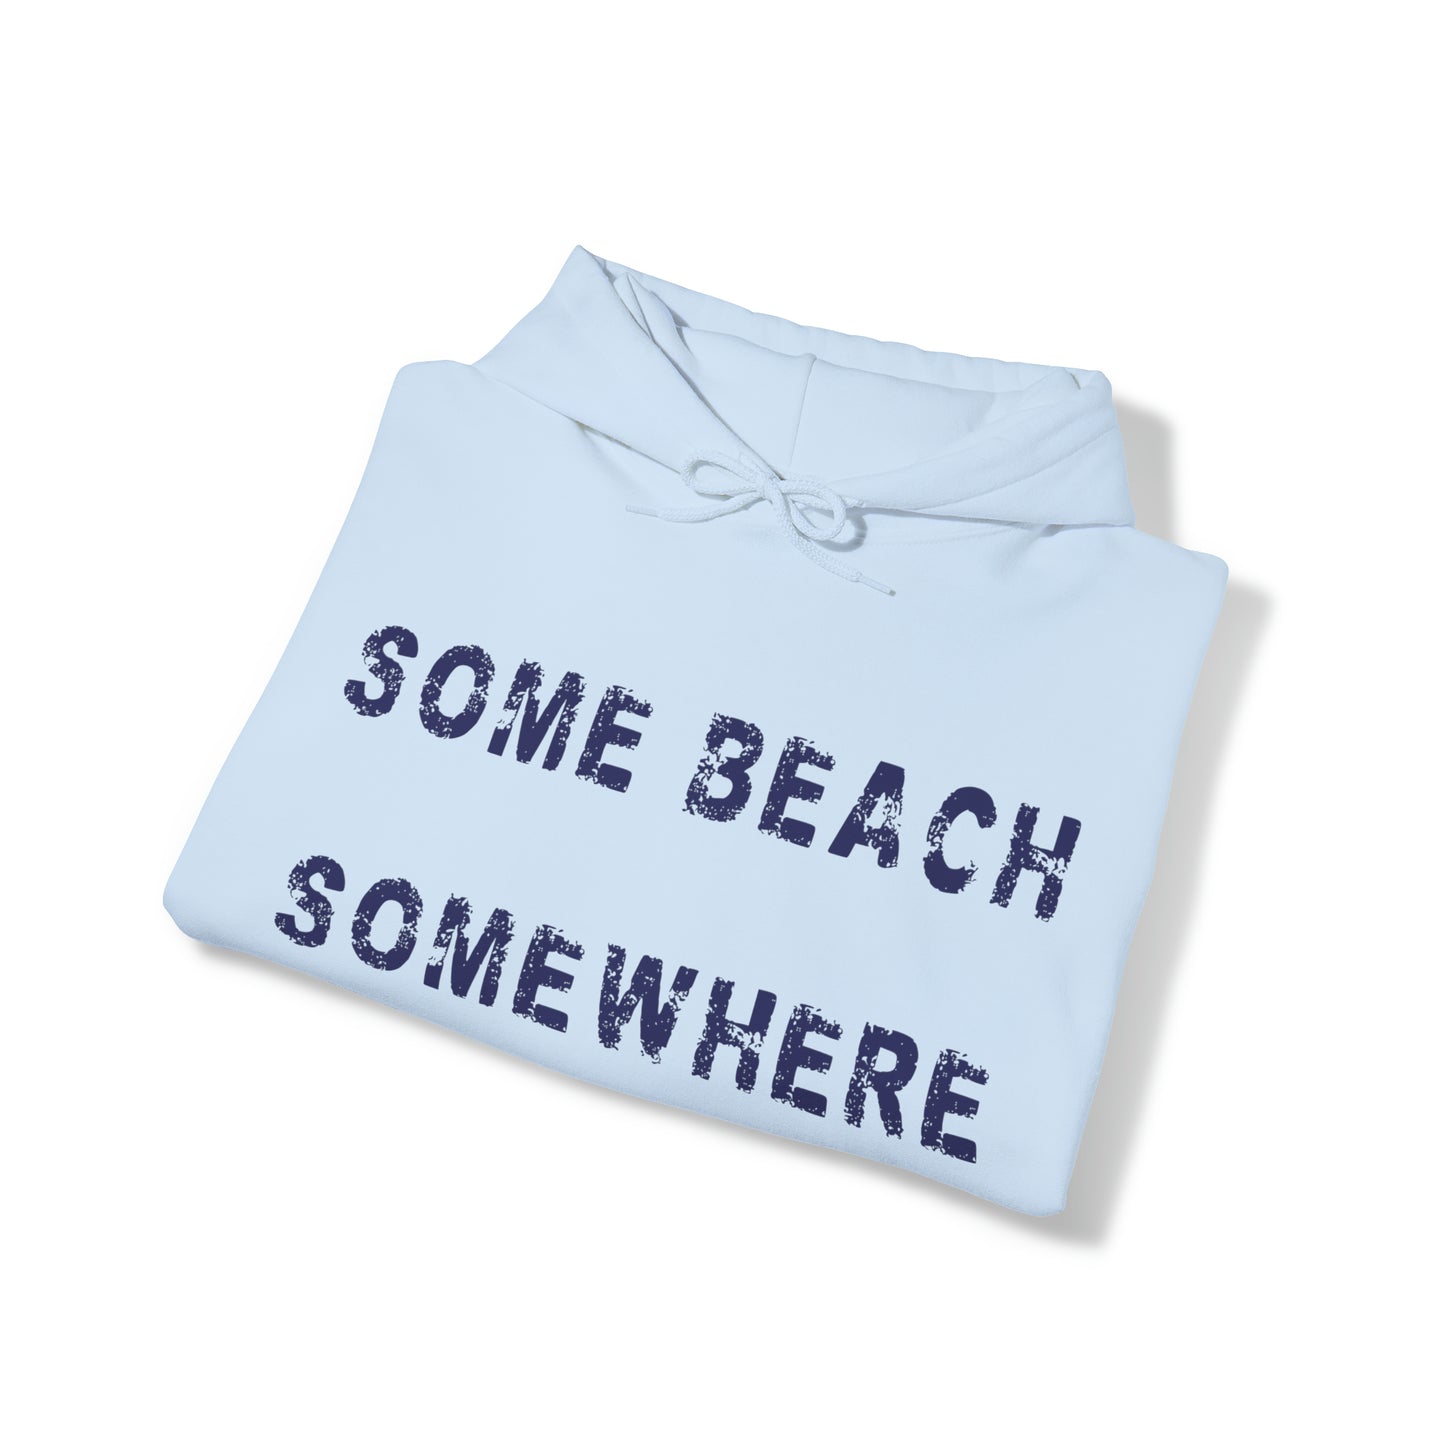 Some Beach Hoodie Travel Sweatshirt For Women Gift For Men